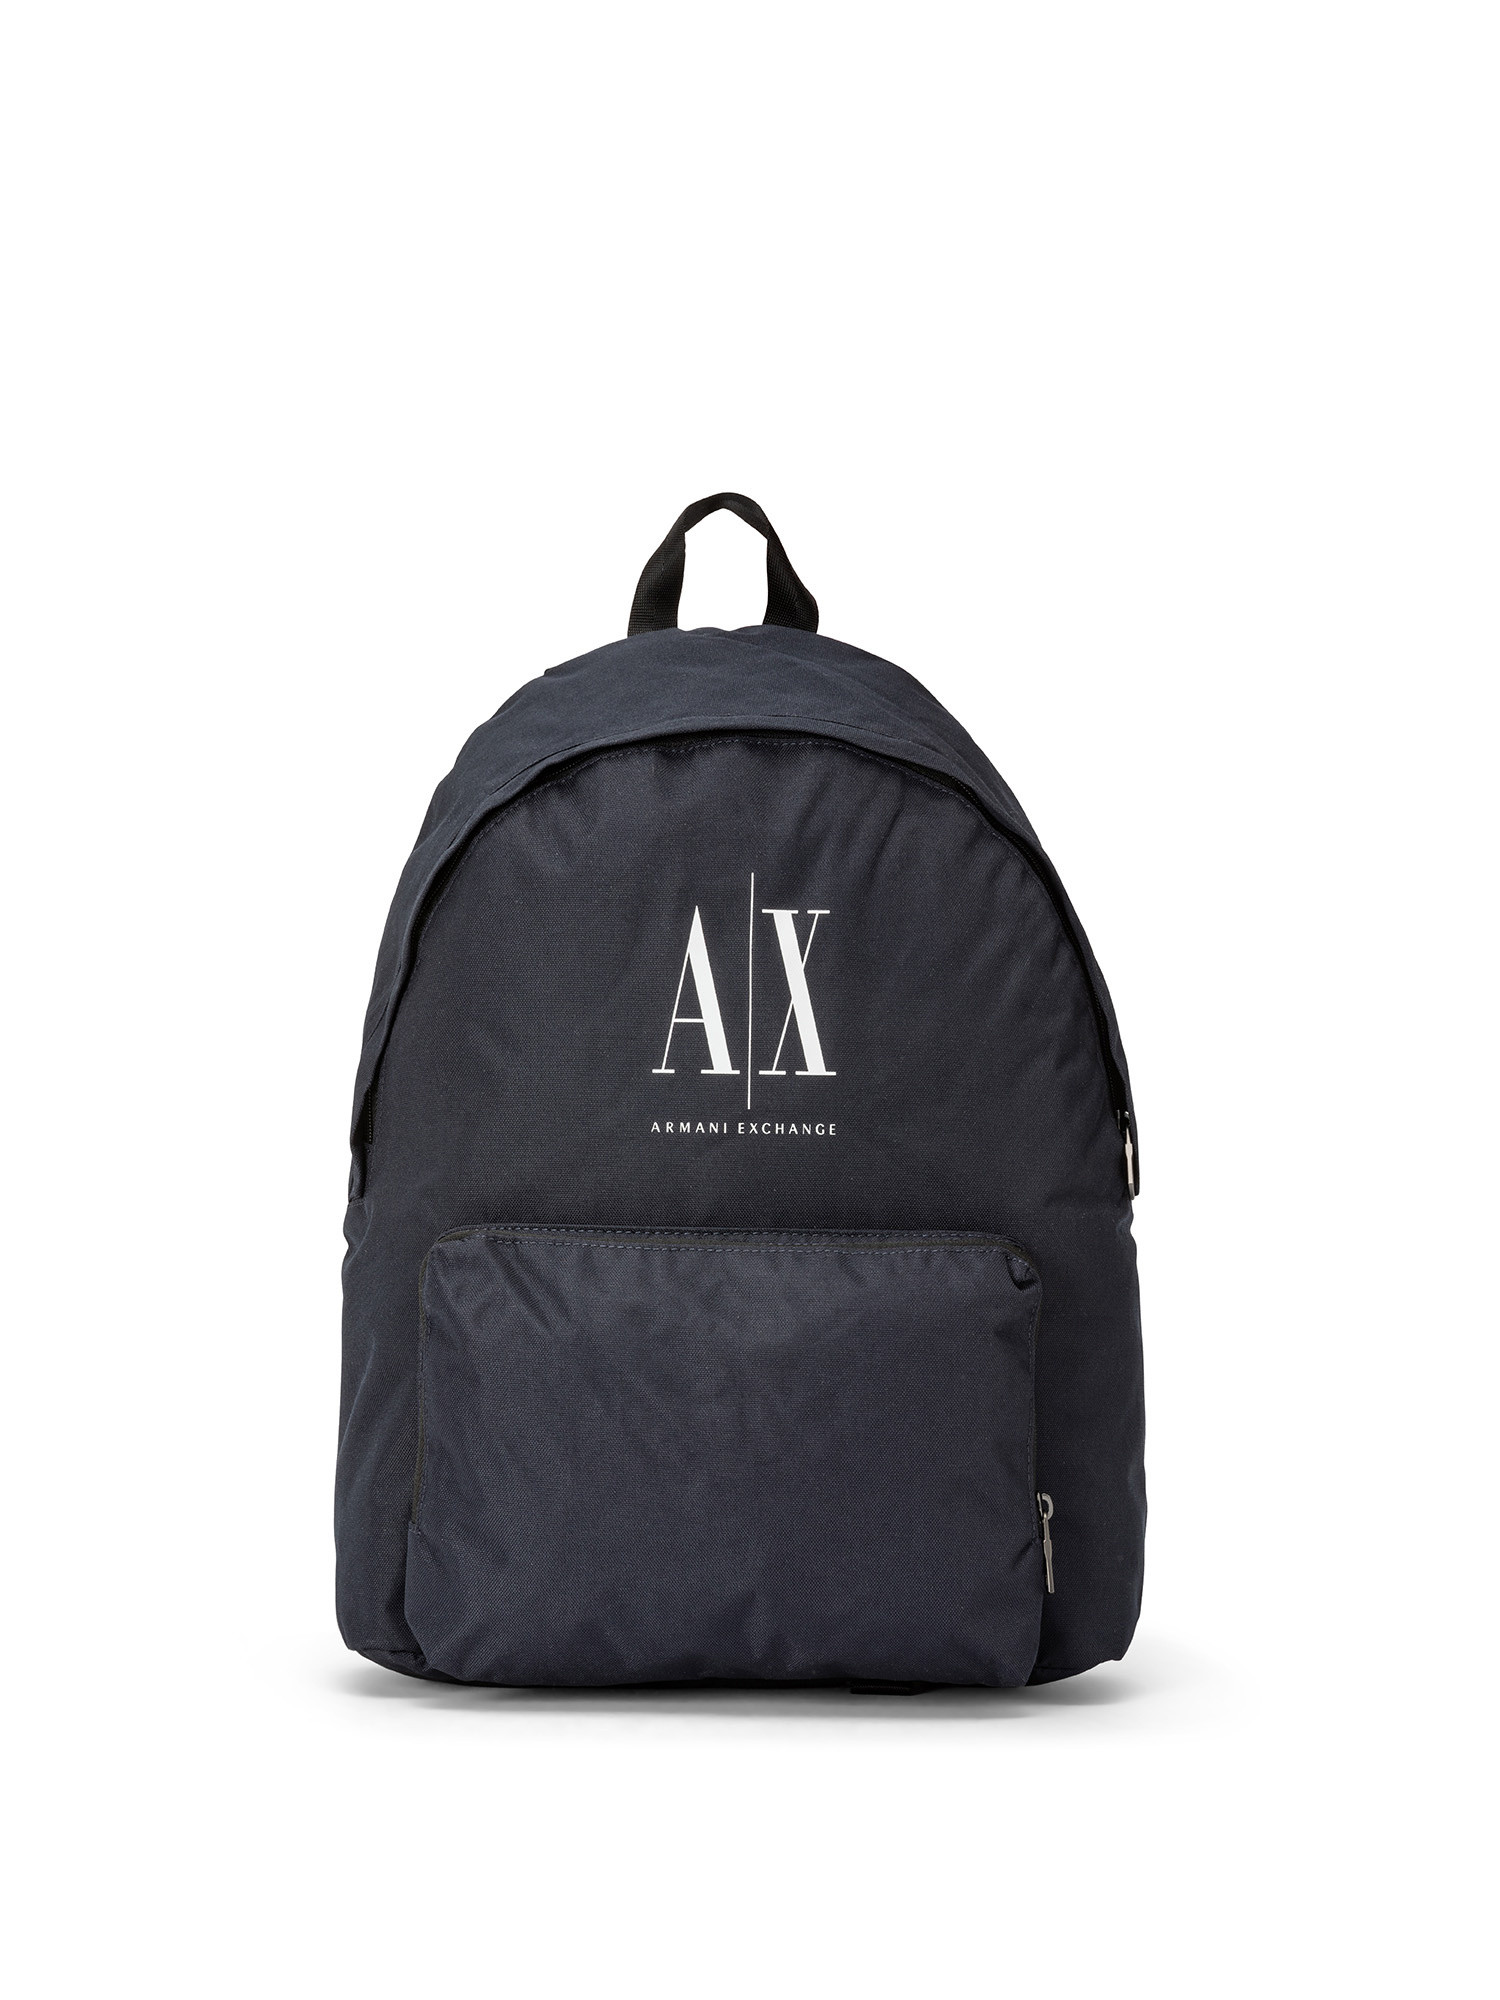 Armani Exchange - Nylon backpack with contrasting logo, Dark Blue, large image number 0